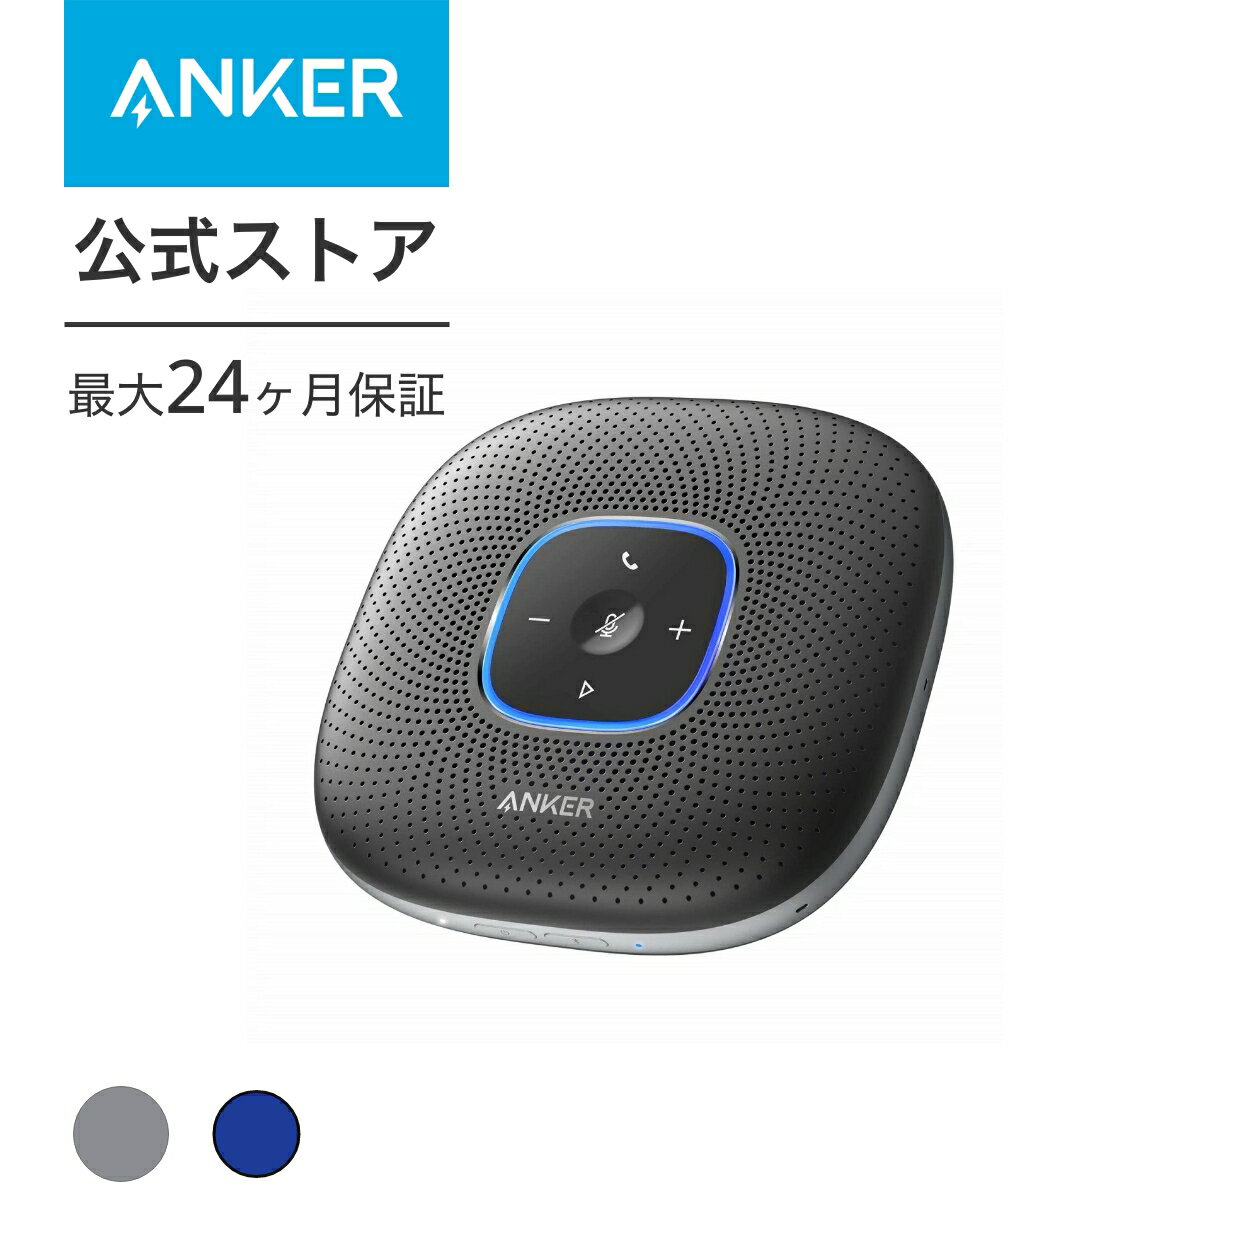 【25%OFFクーポン 5/16まで】Anker PowerConf 会議用 Bluetooth スピーカーフォン 【 全指向性マイク/エコーキャンセリング/ノイズキャンセリング/大容量バッテリー/Skype Zoom など対応 / 24…